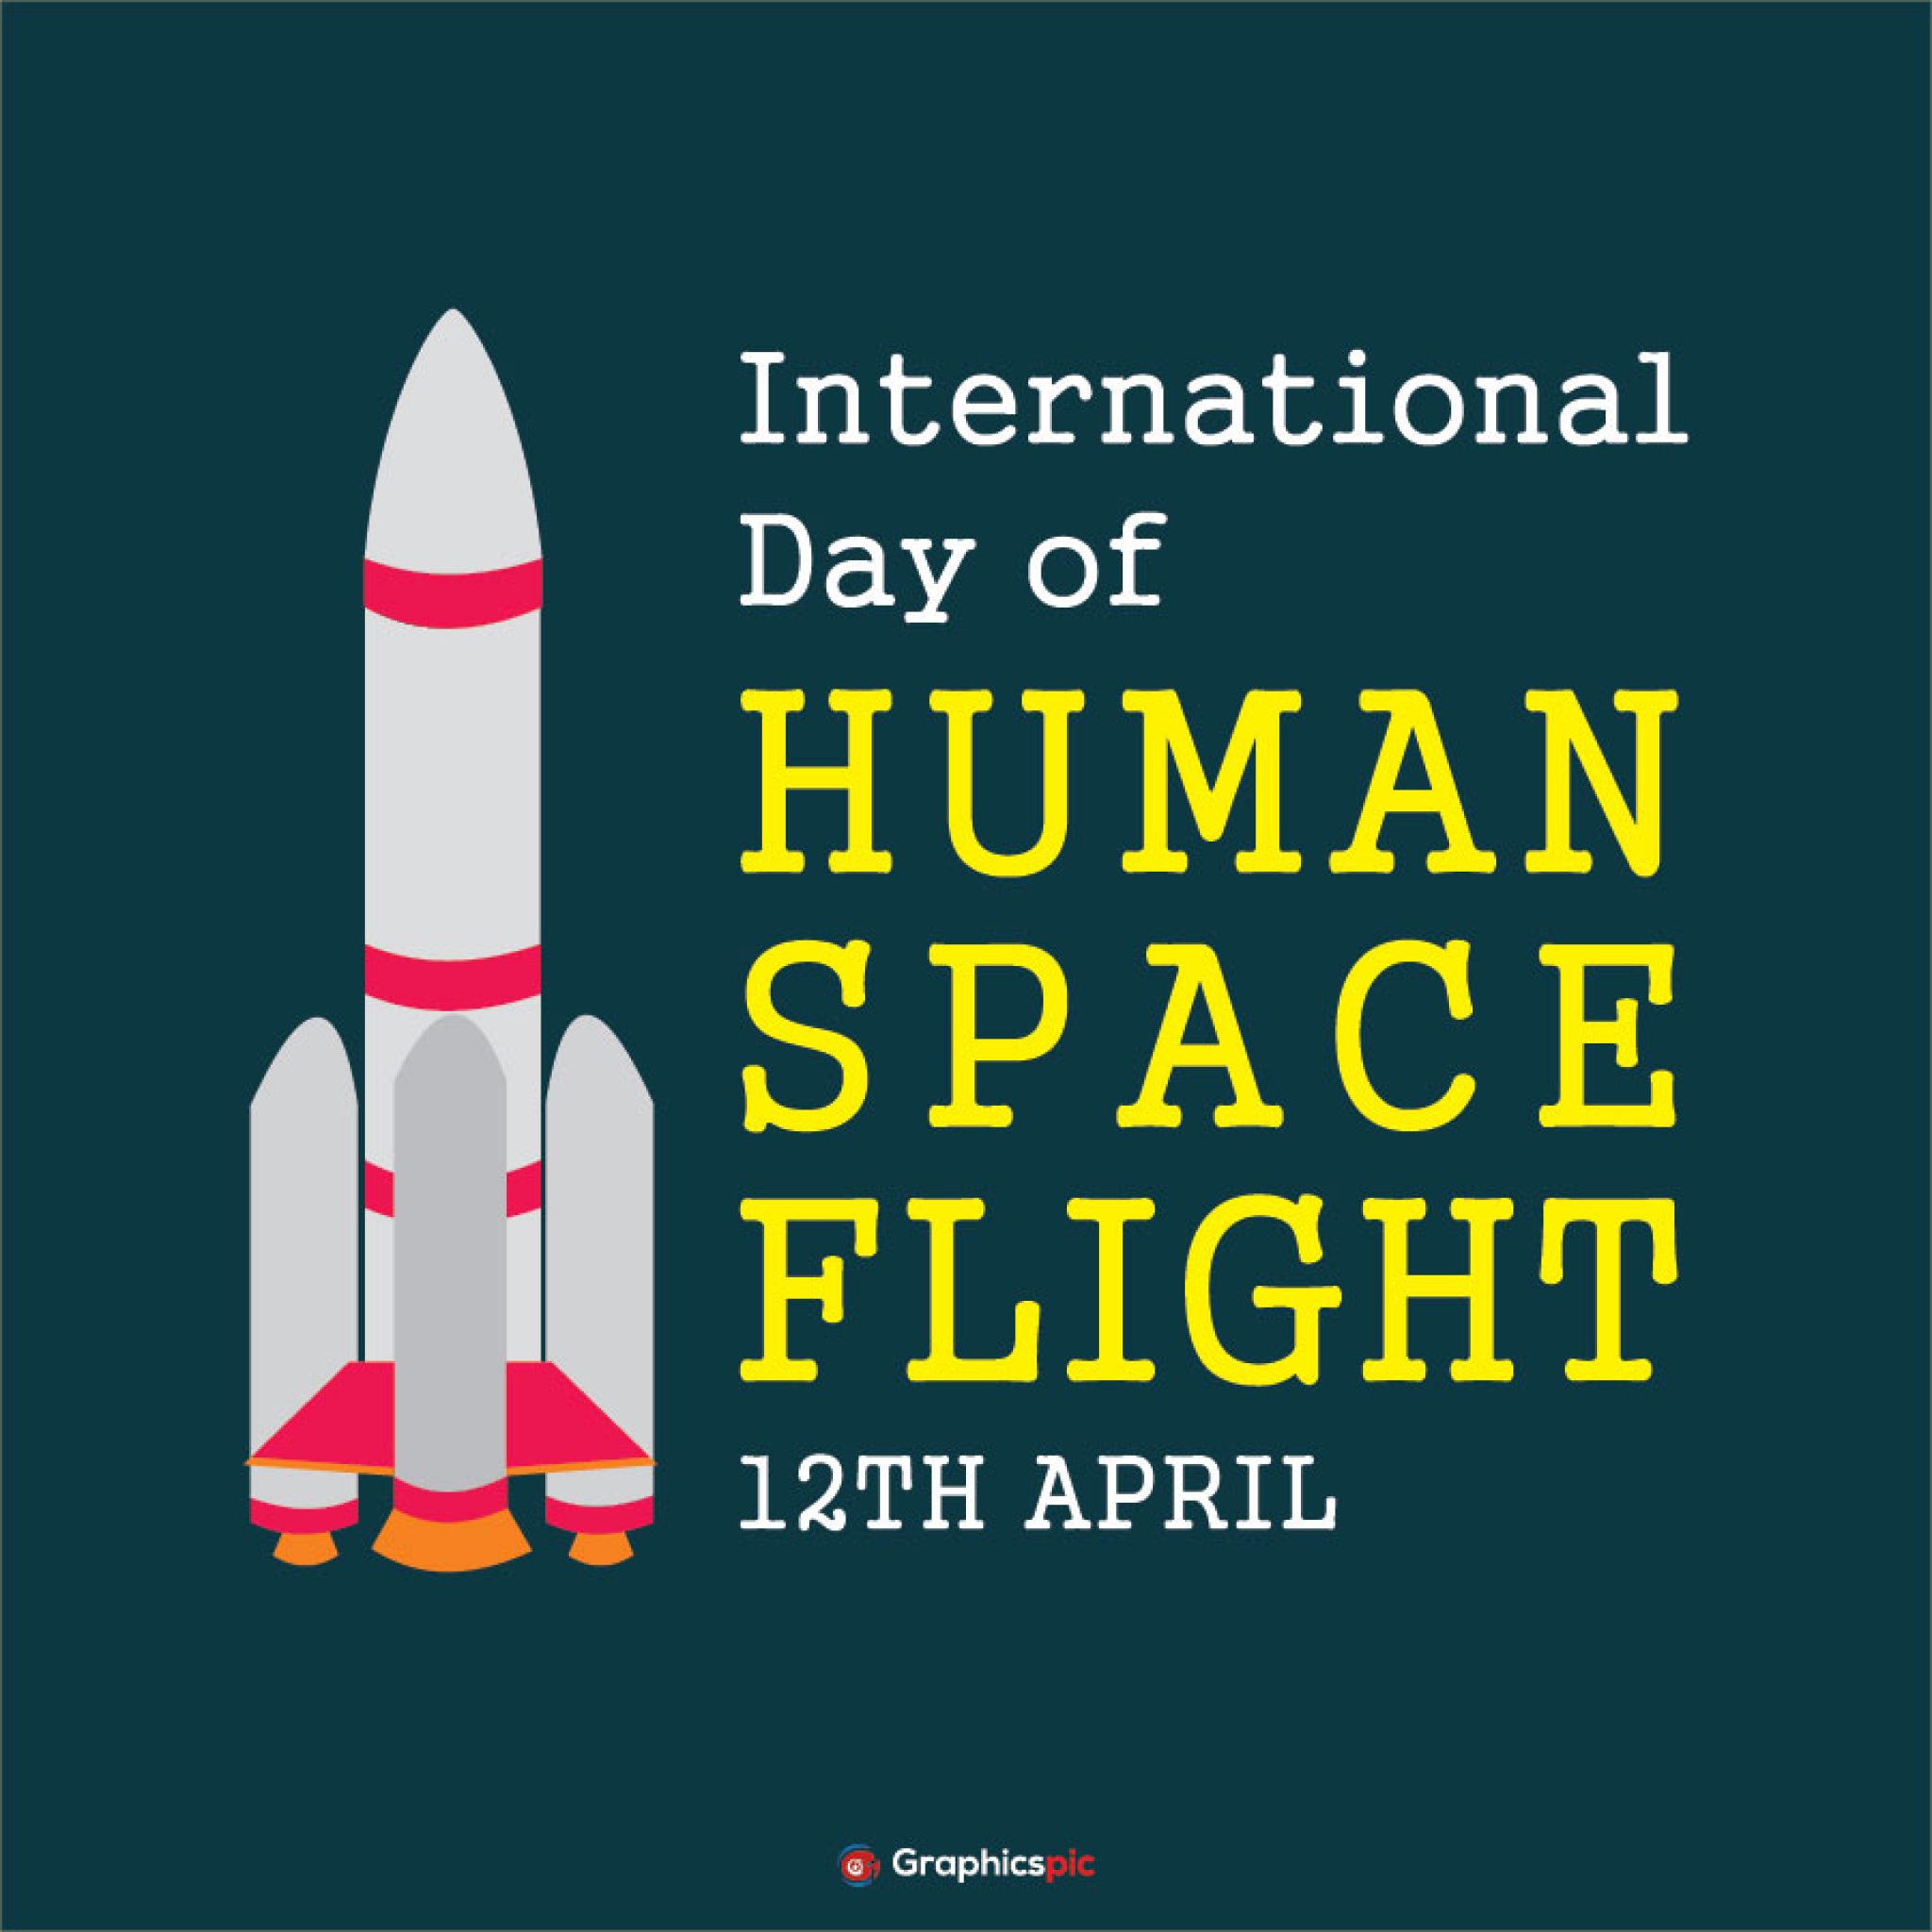 International day of human space flight illustration poster design